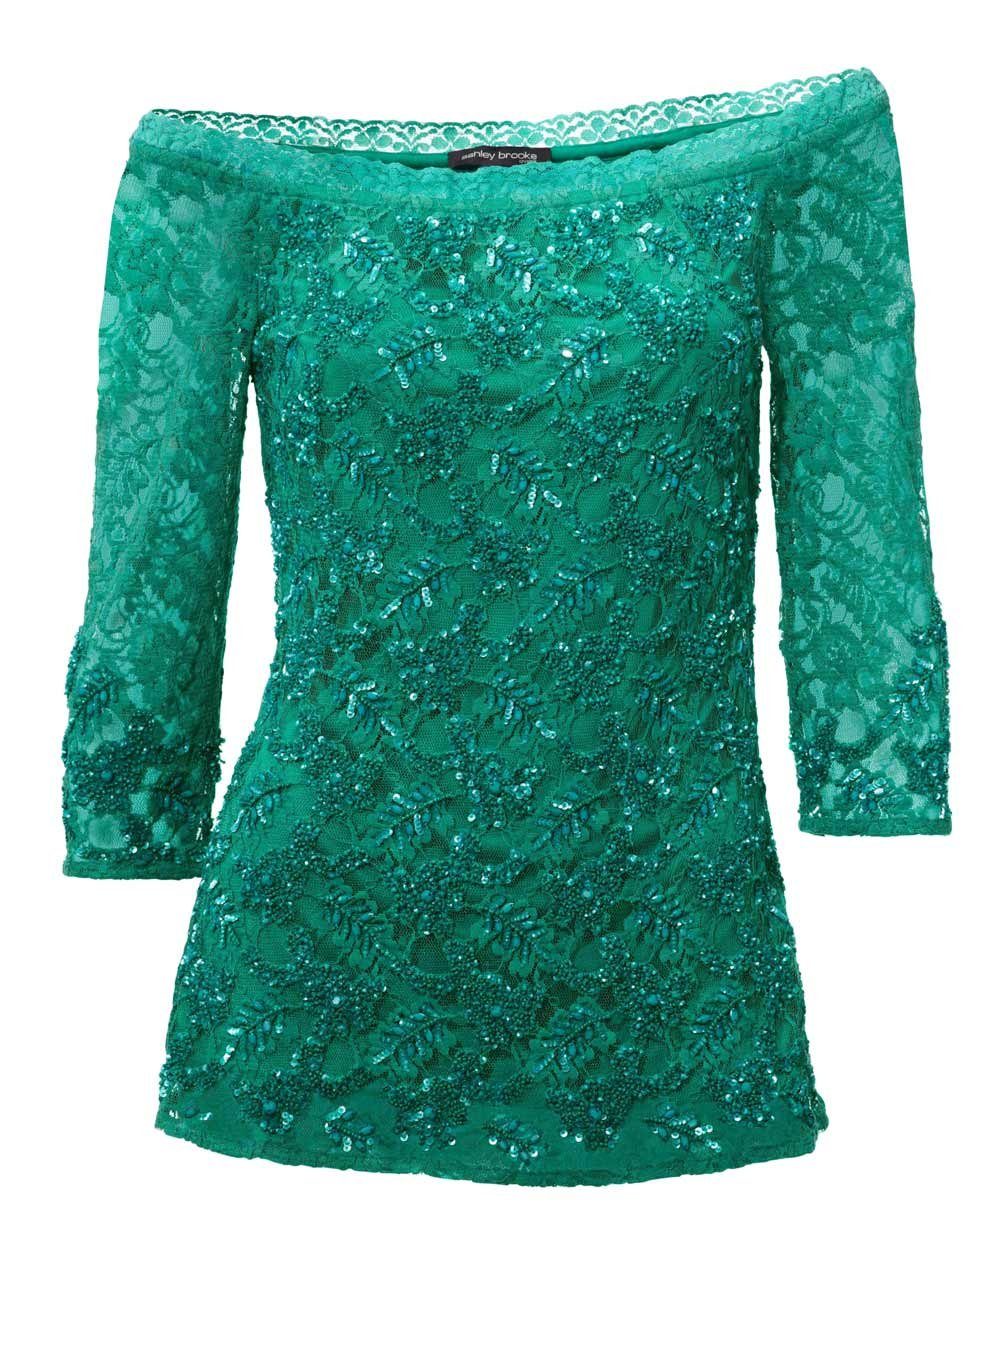 Designer-Spitzenshirt grün Ashley BROOKE by ASHLEY Damen heine m. Brooke Pailletten, Spitzenshirt